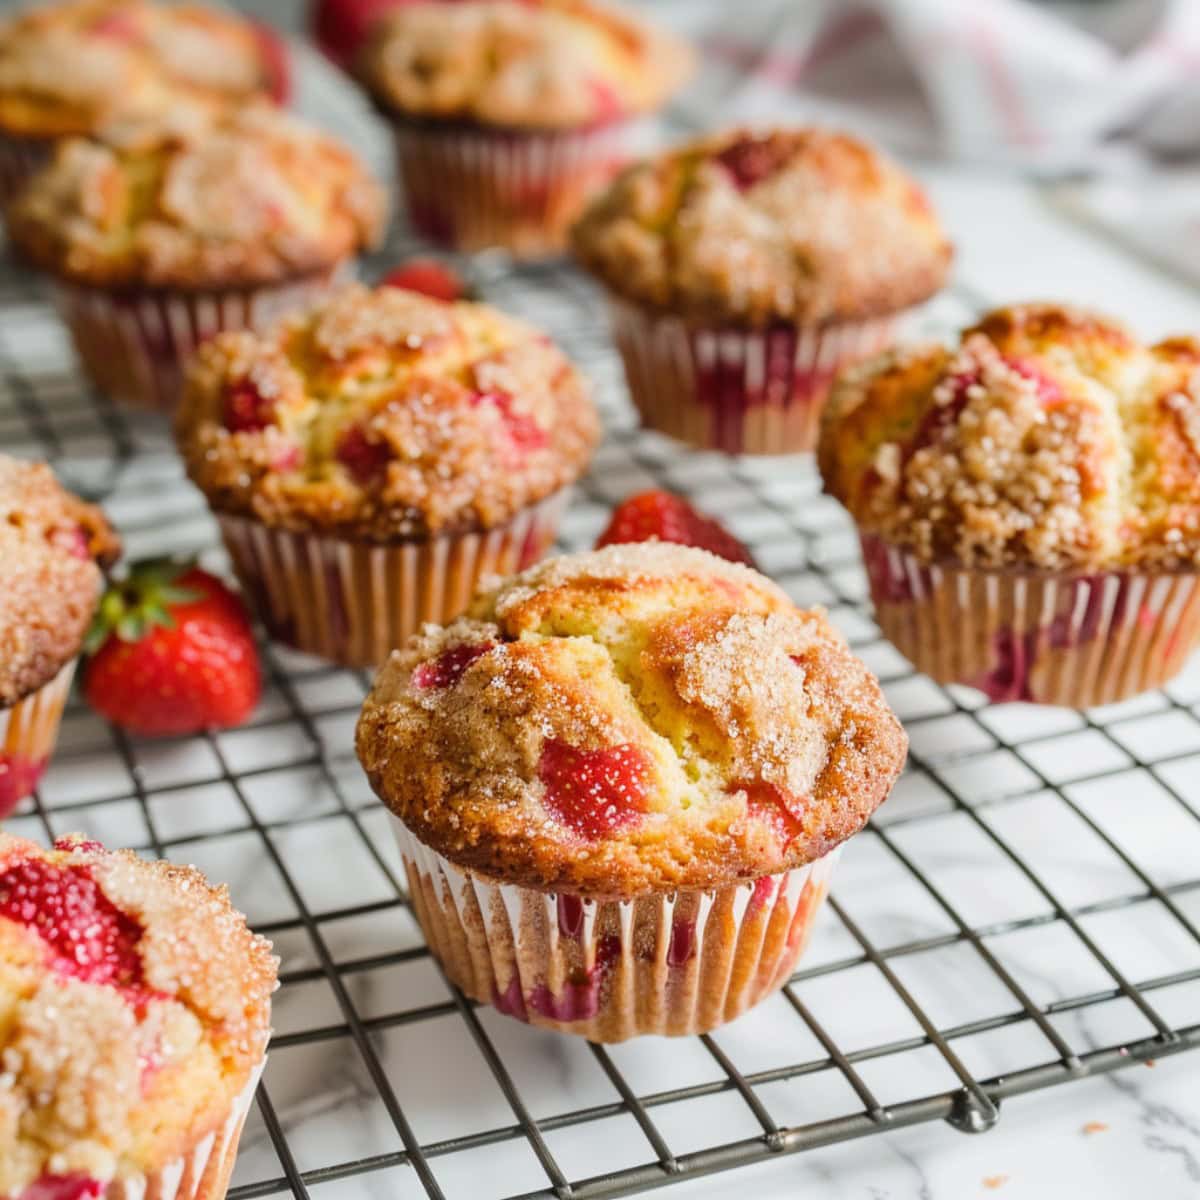 Homemade muffins, bursting with the sweet taste of ripe strawberries